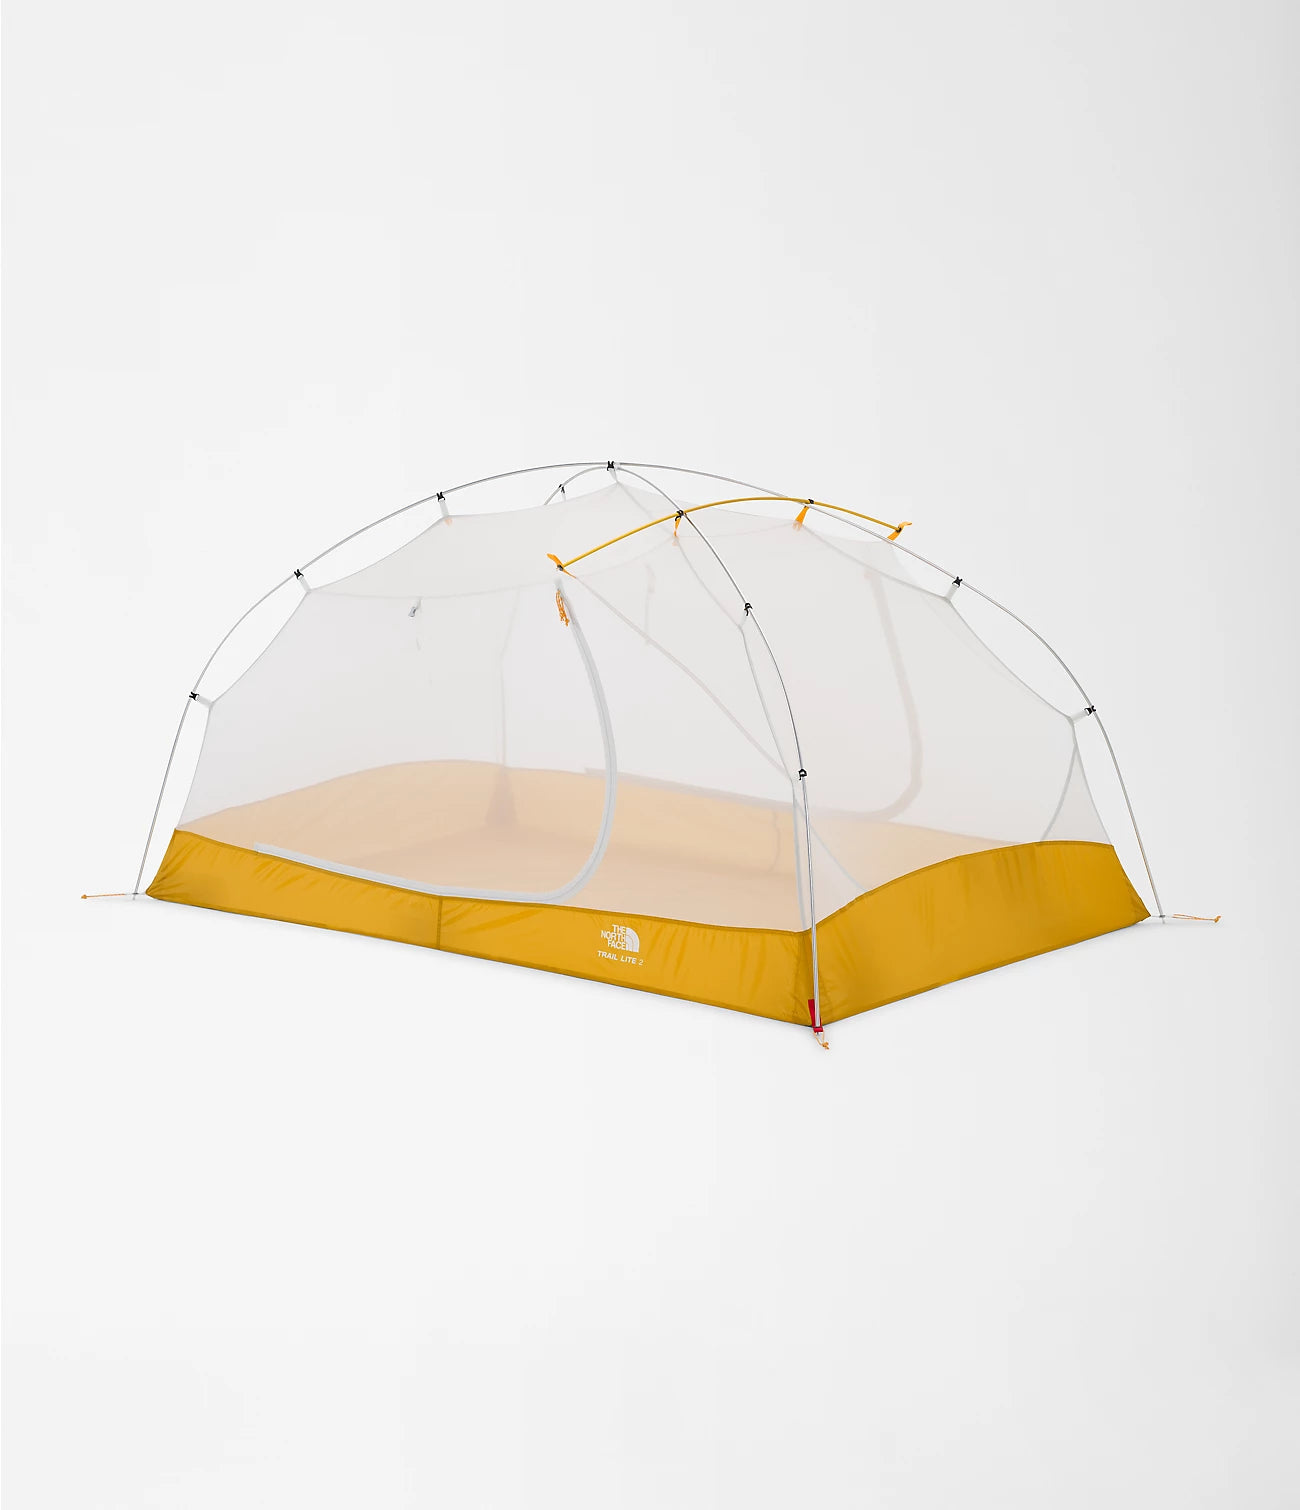 Tent Rental